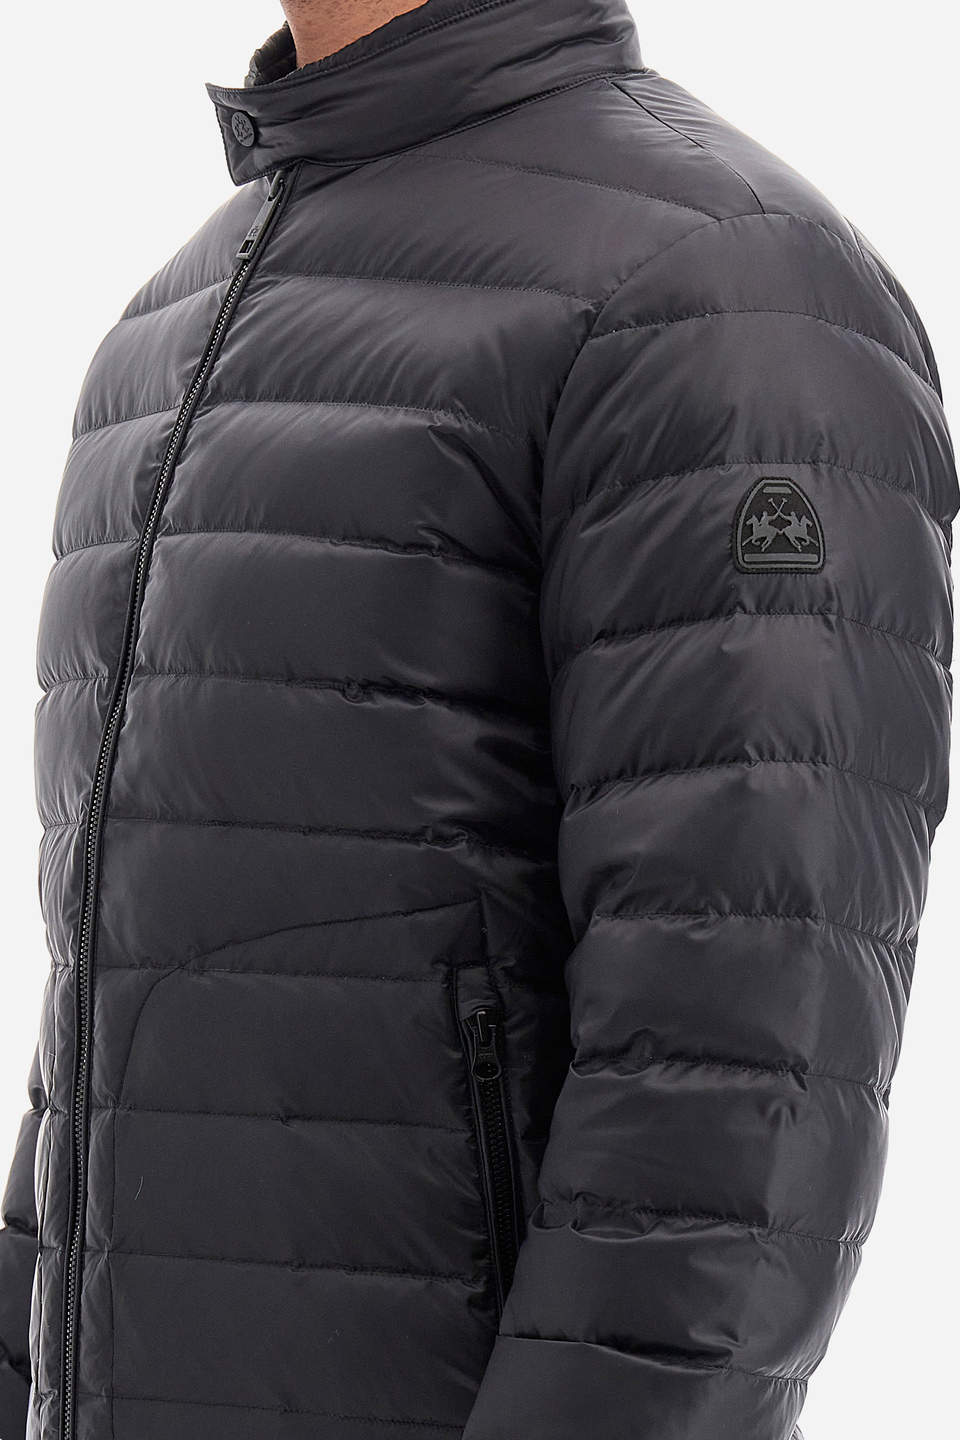 Outdoor giacca uomo regular fit - Way | La Martina - Official Online Shop